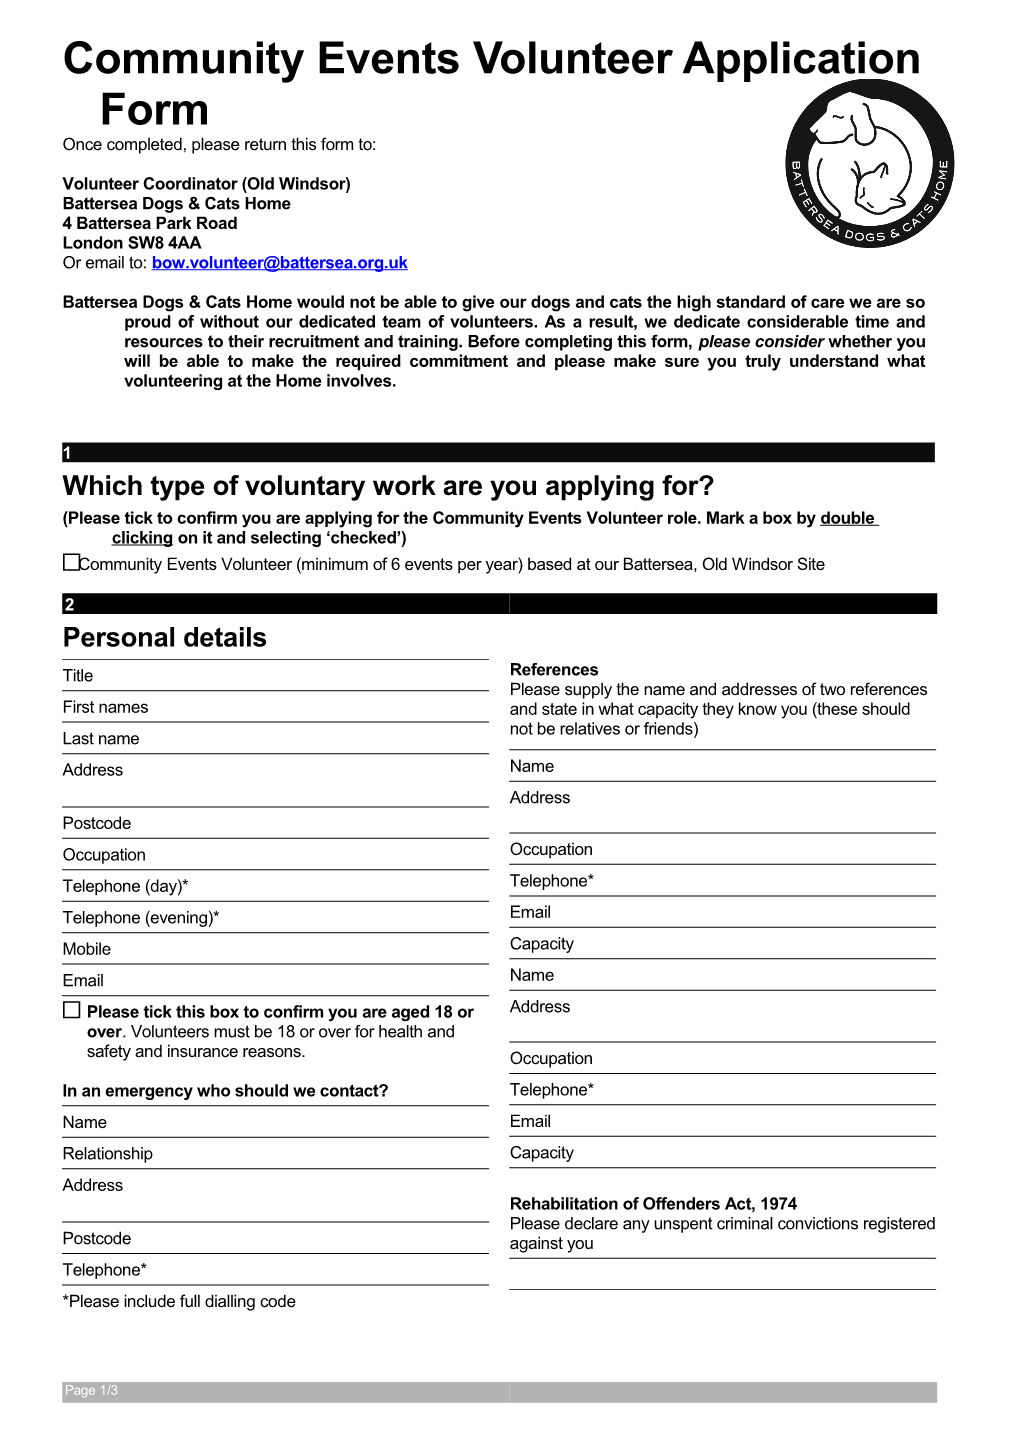 Community Events Volunteer Application Form